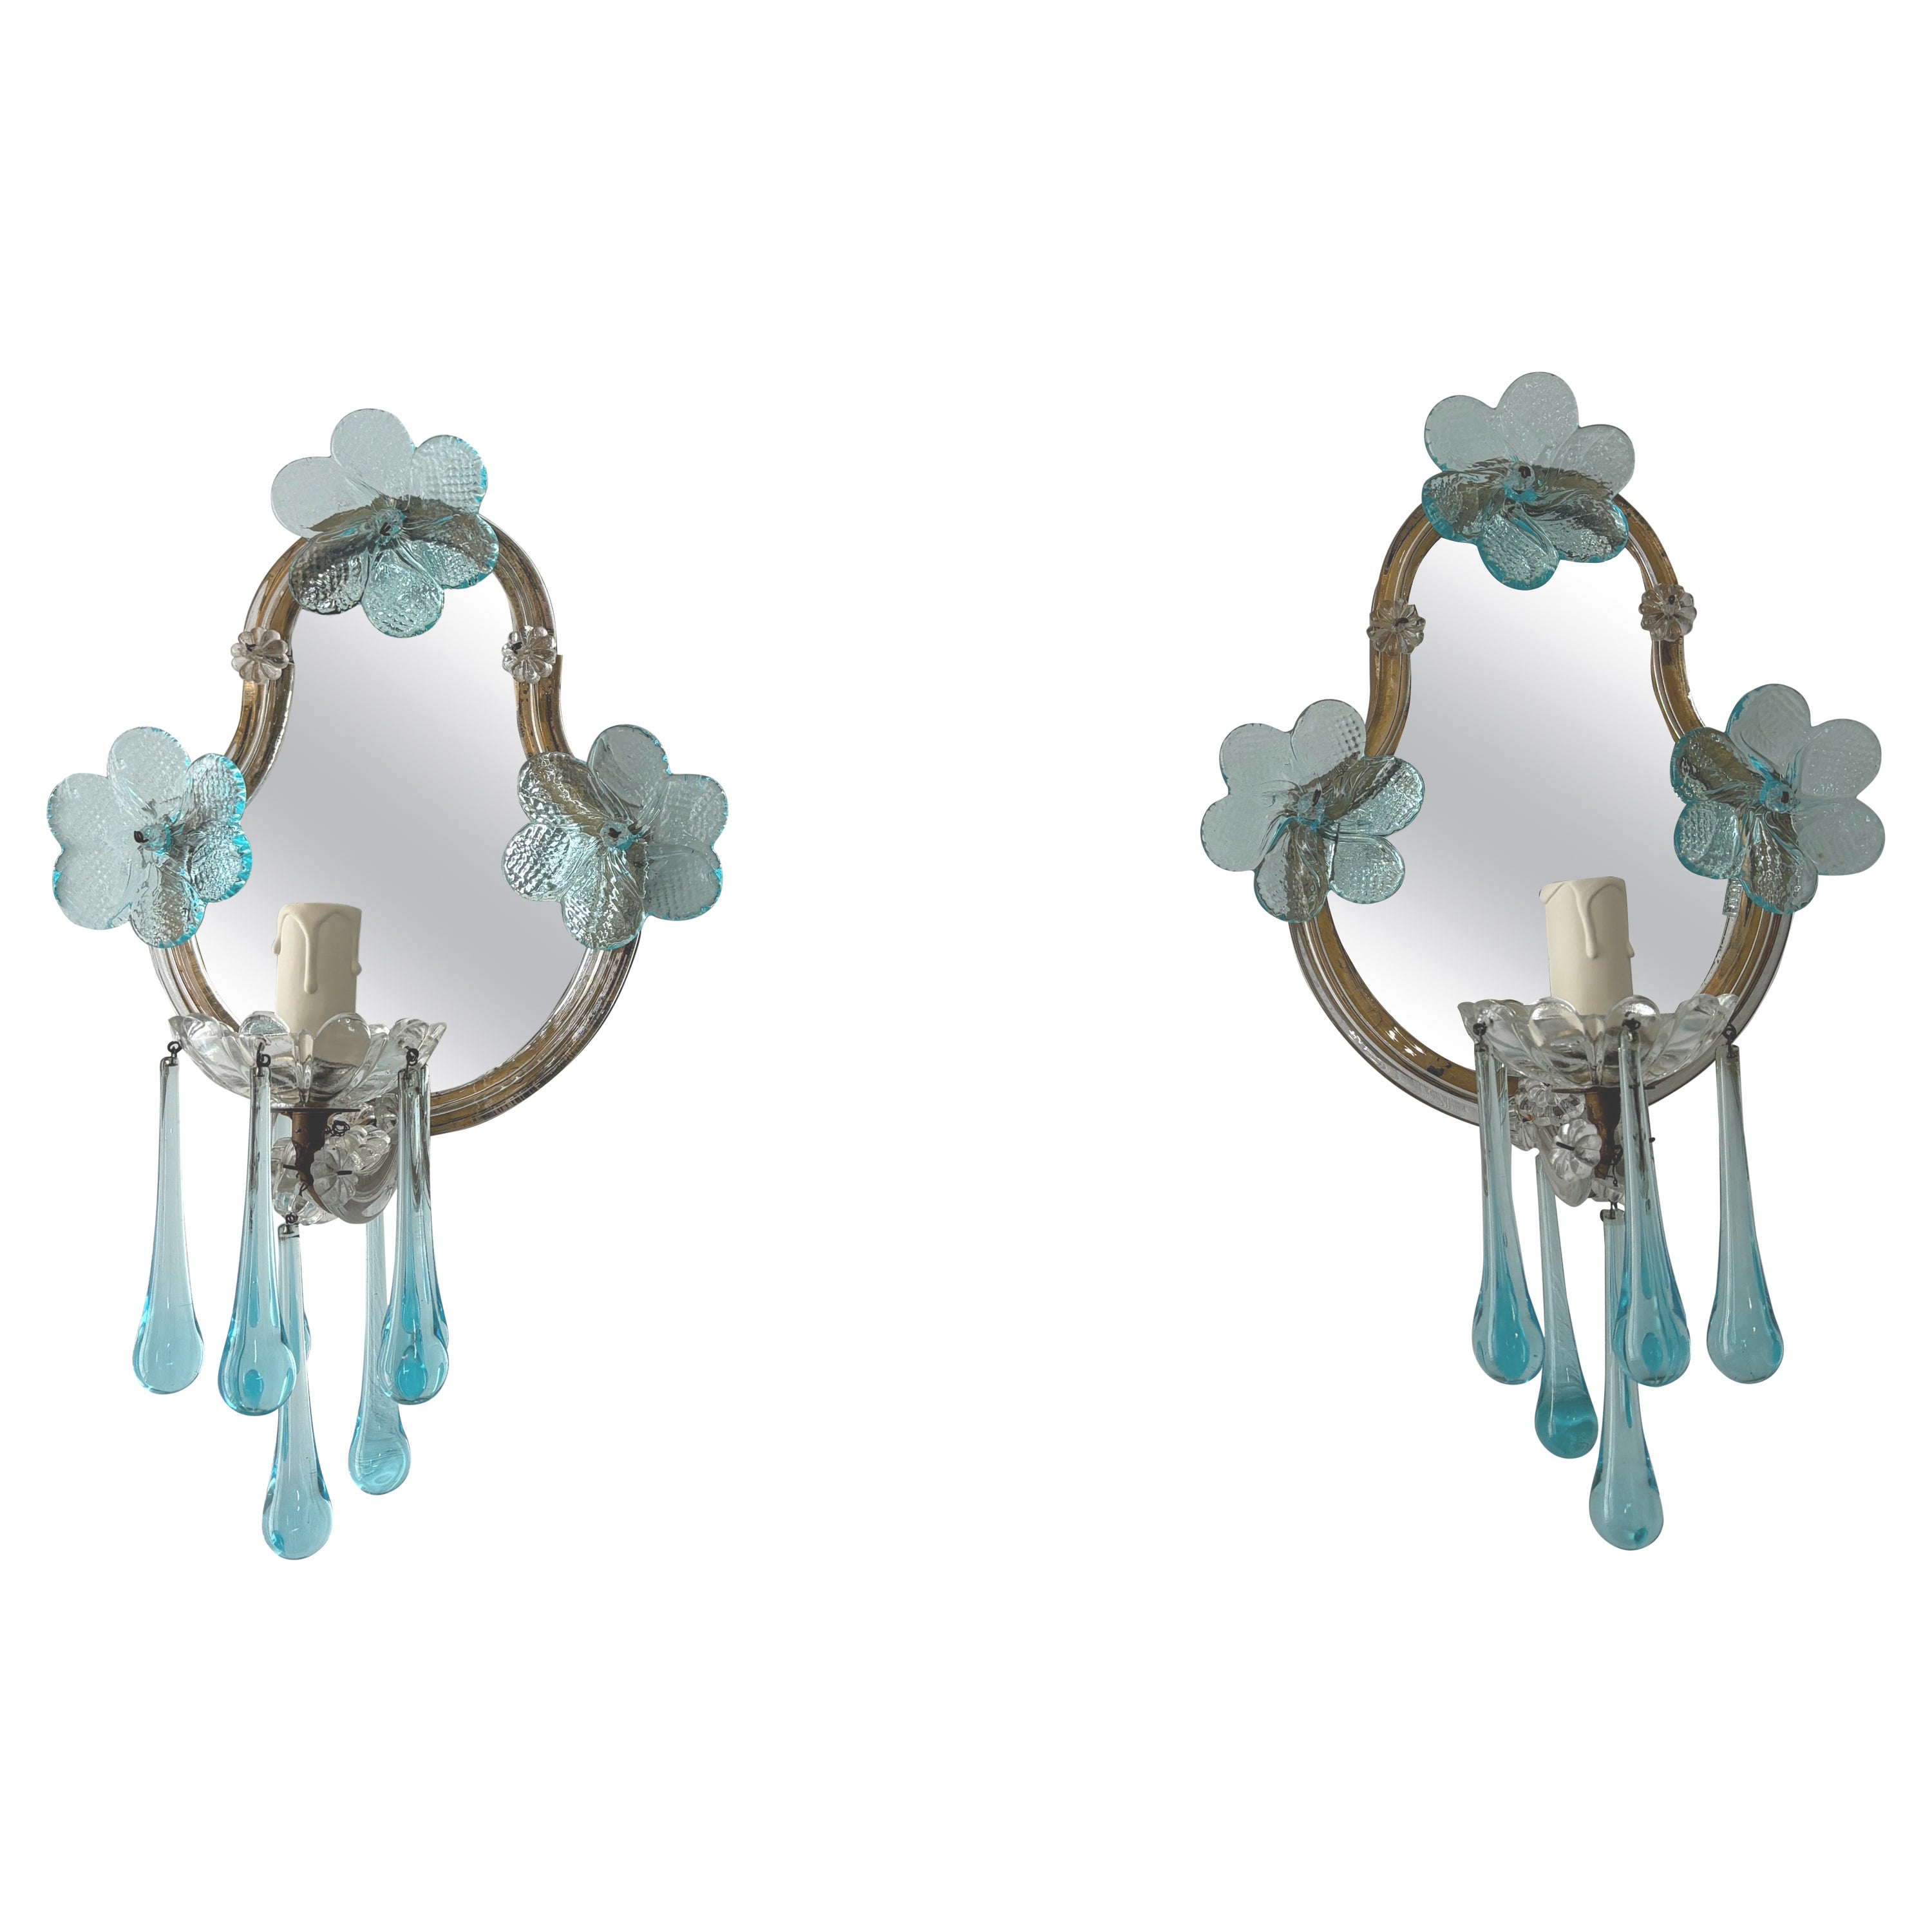 1920s French Rare Aqua Blue Murano Glass Drops & Flowers Mirrored Sconces For Sale